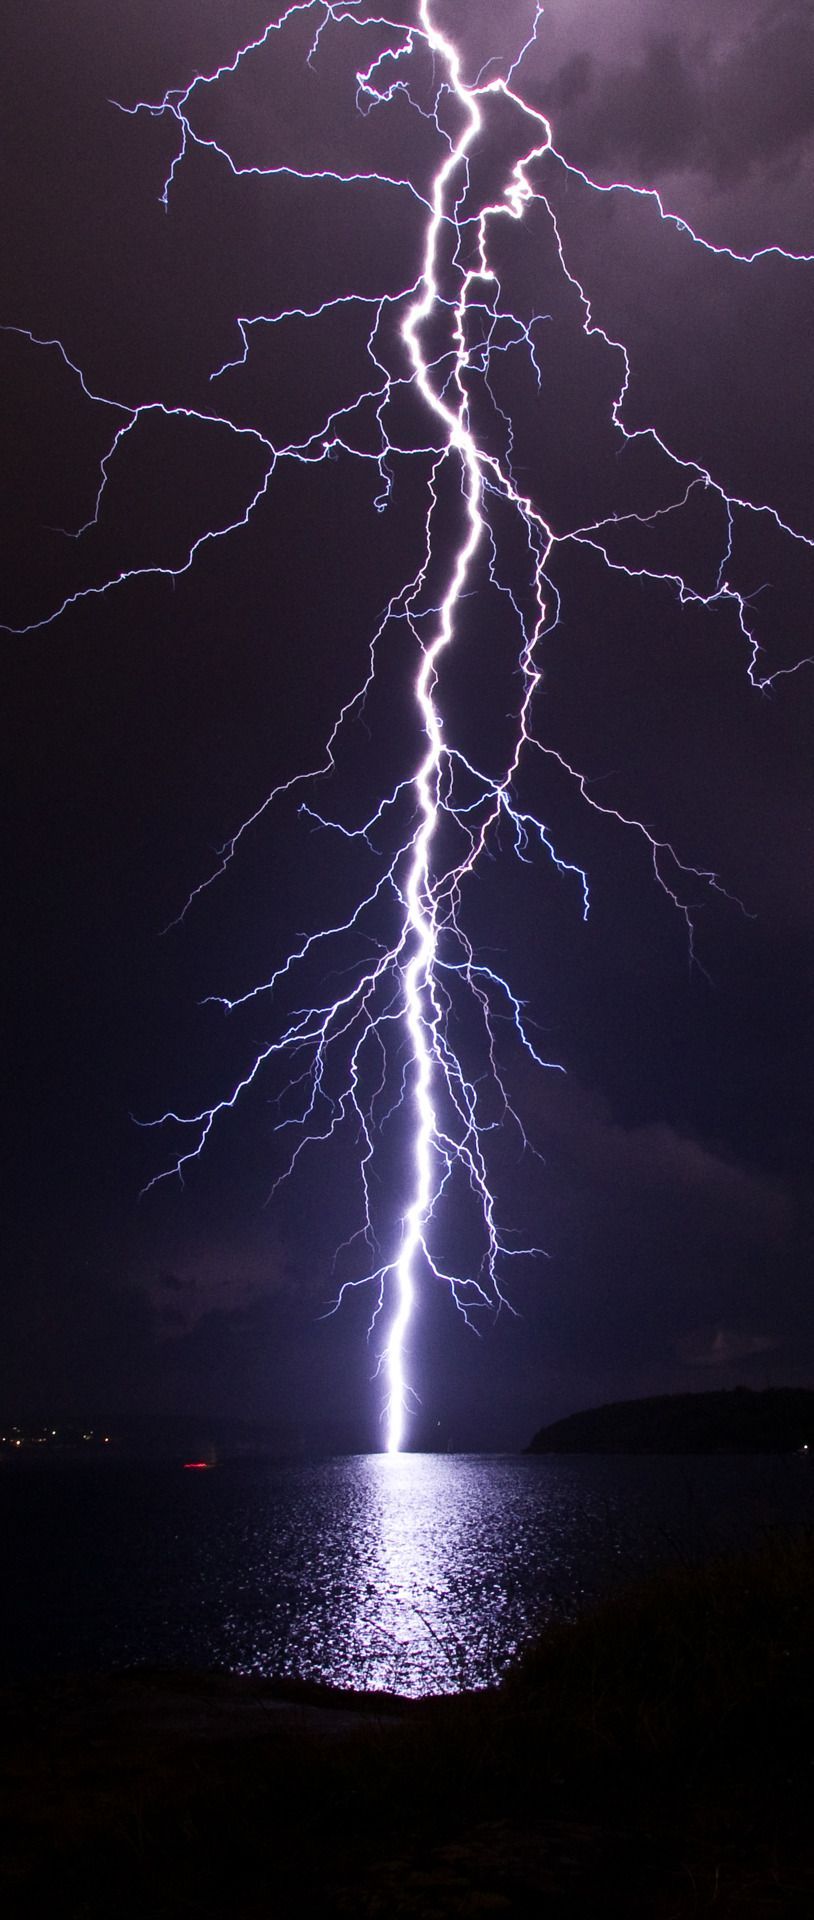 Lightning Strike – Sydney Thunderstorm 8th April 2012 By KAM=//=DHATT via